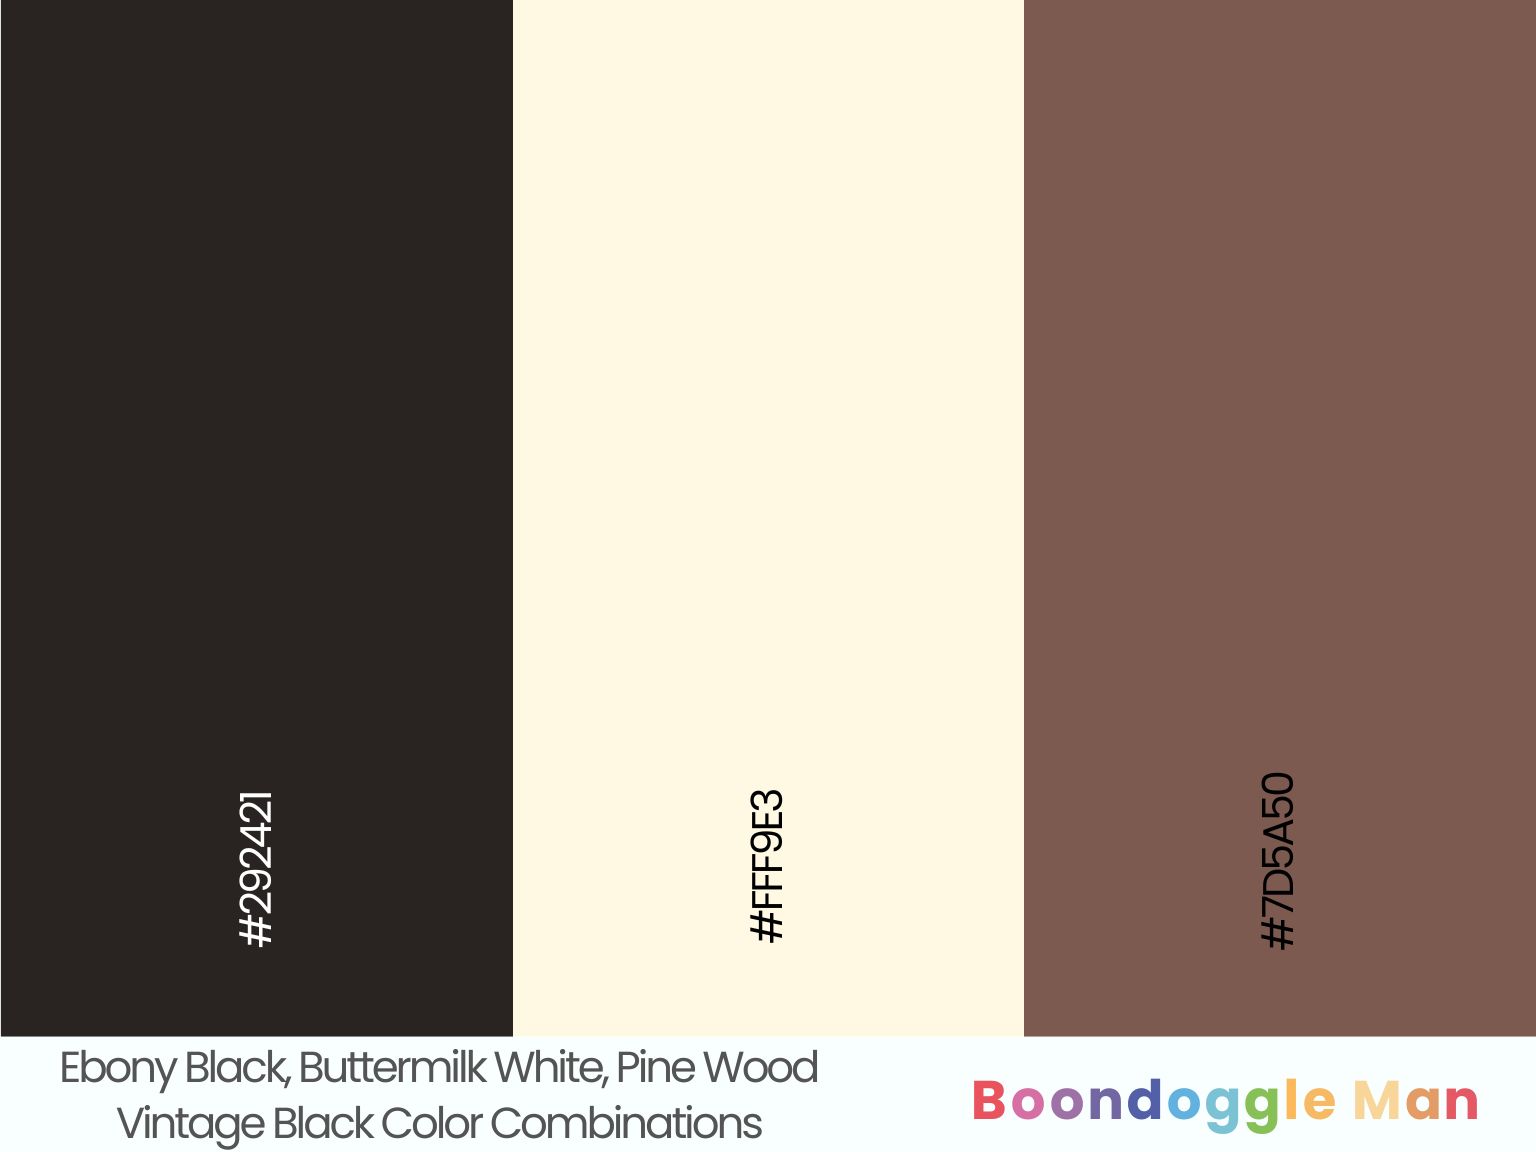 Ebony Black, Buttermilk White, Pine Wood